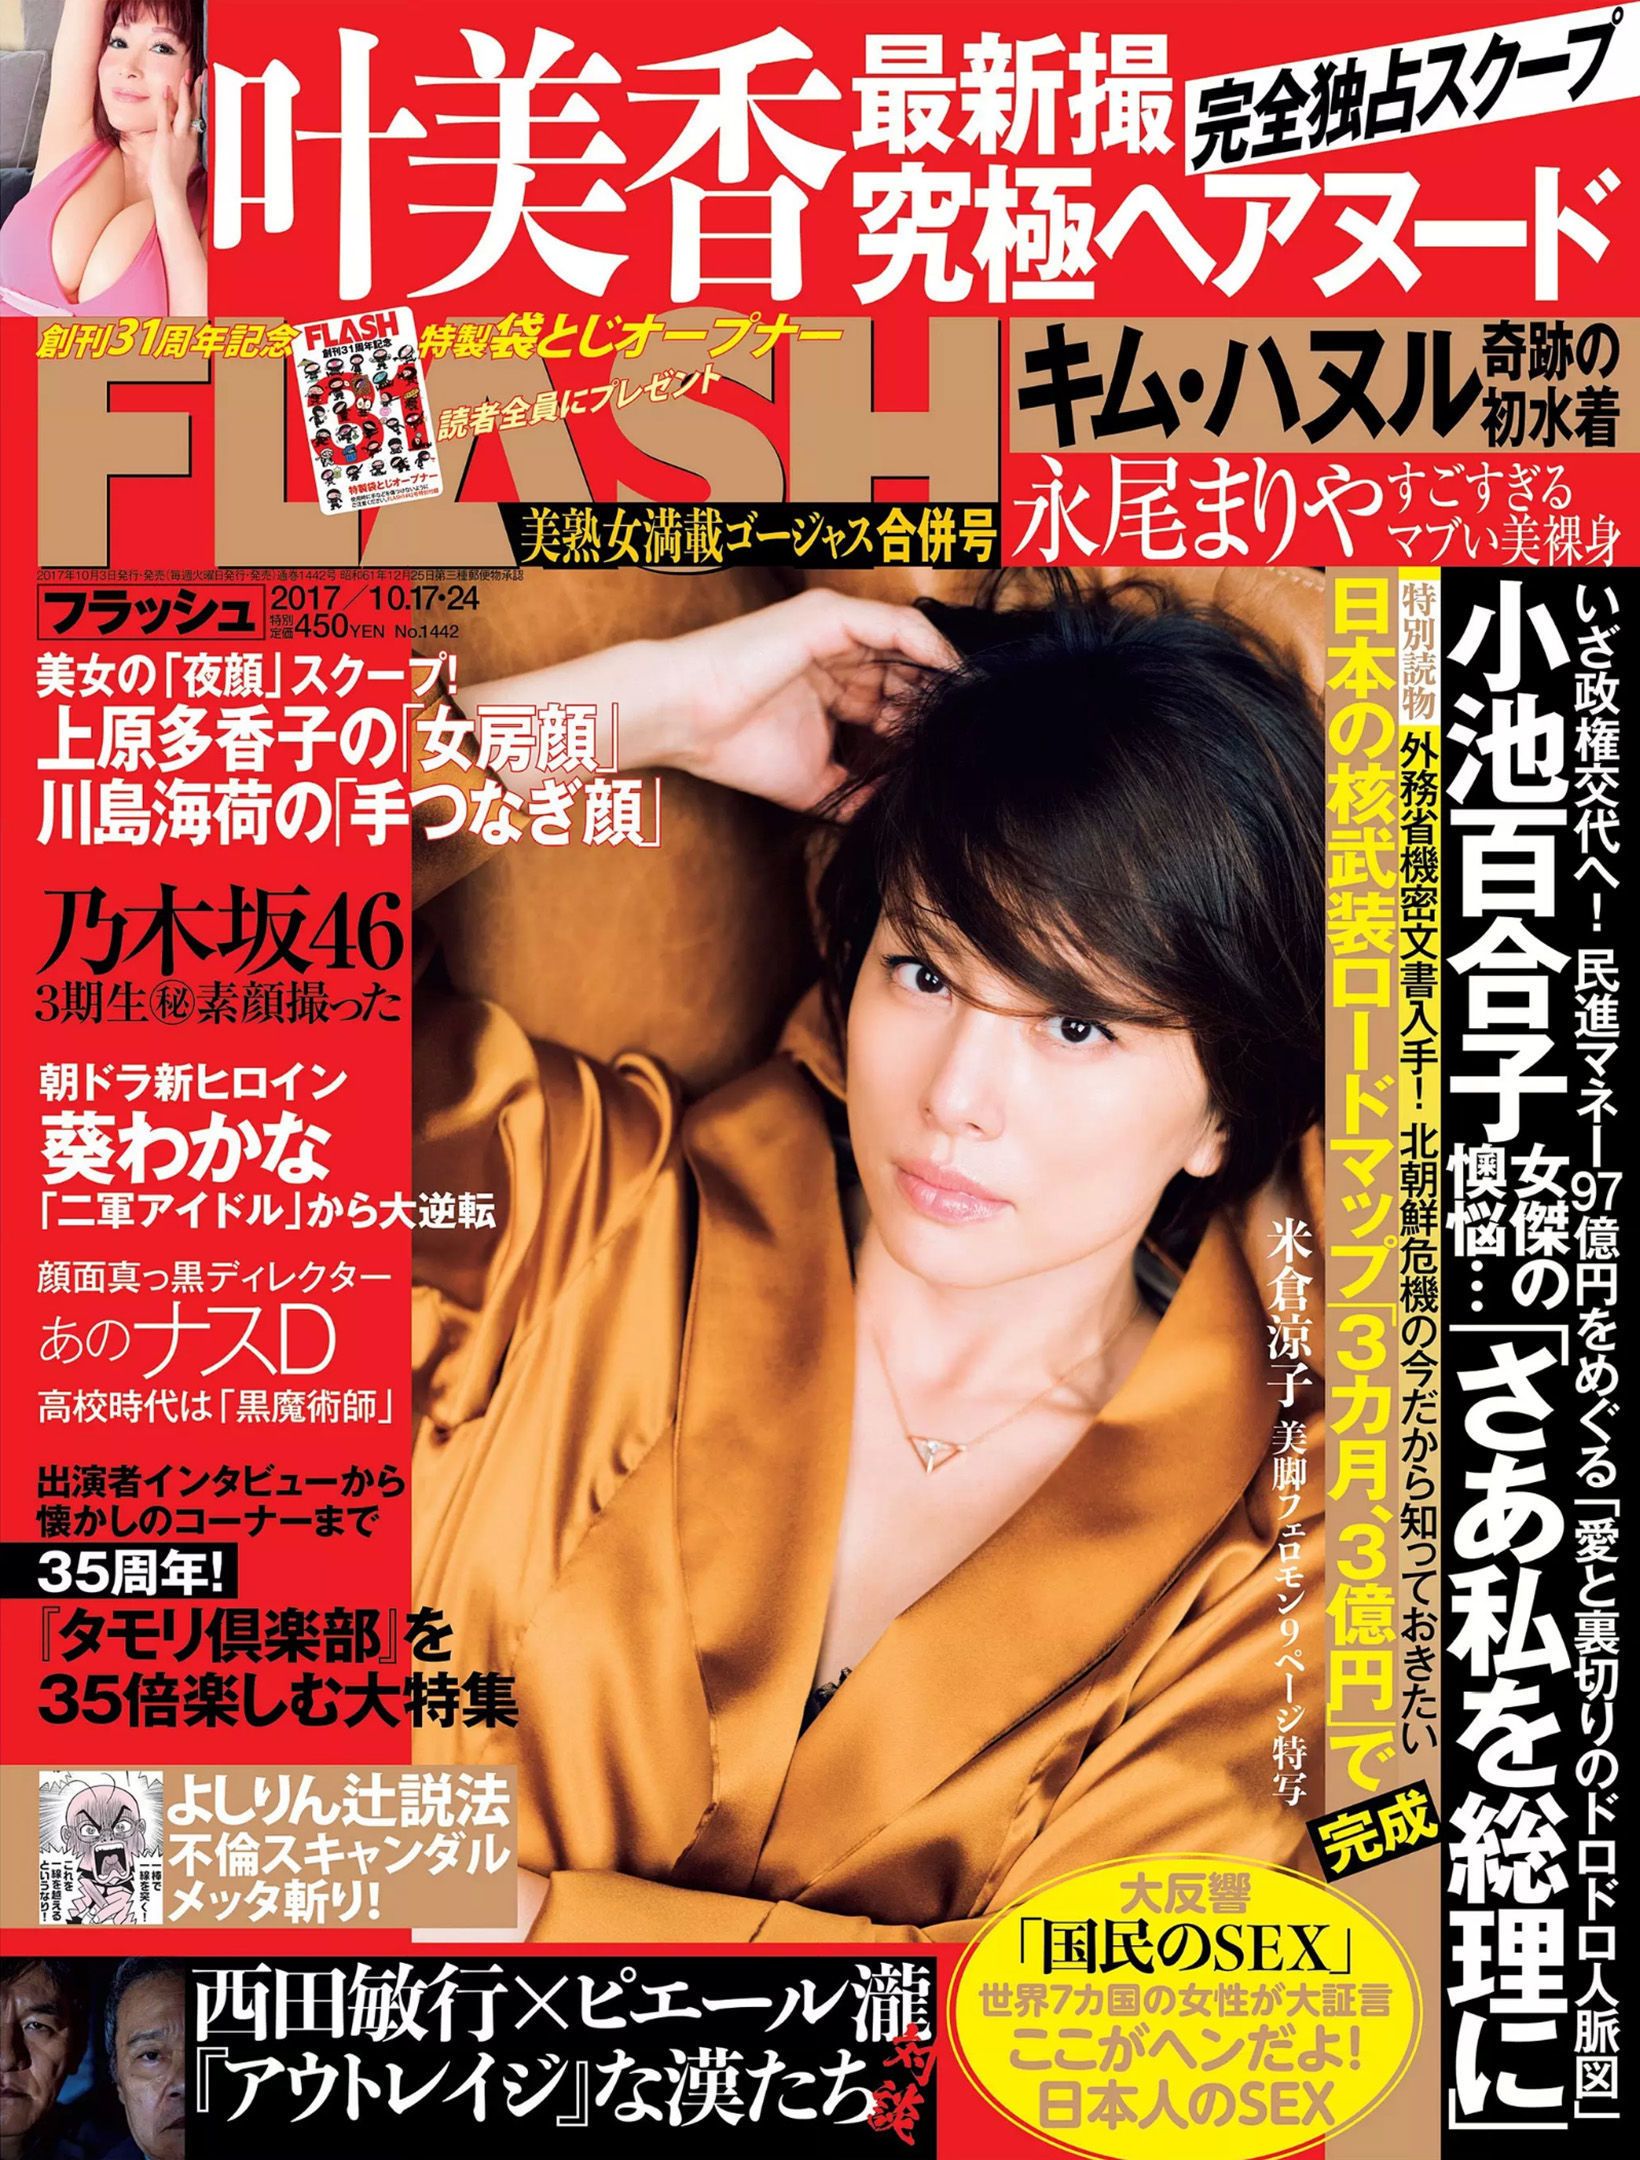 [FLASH]杂志:叶美香高品质私家拍摄作品在线浏览(20P)